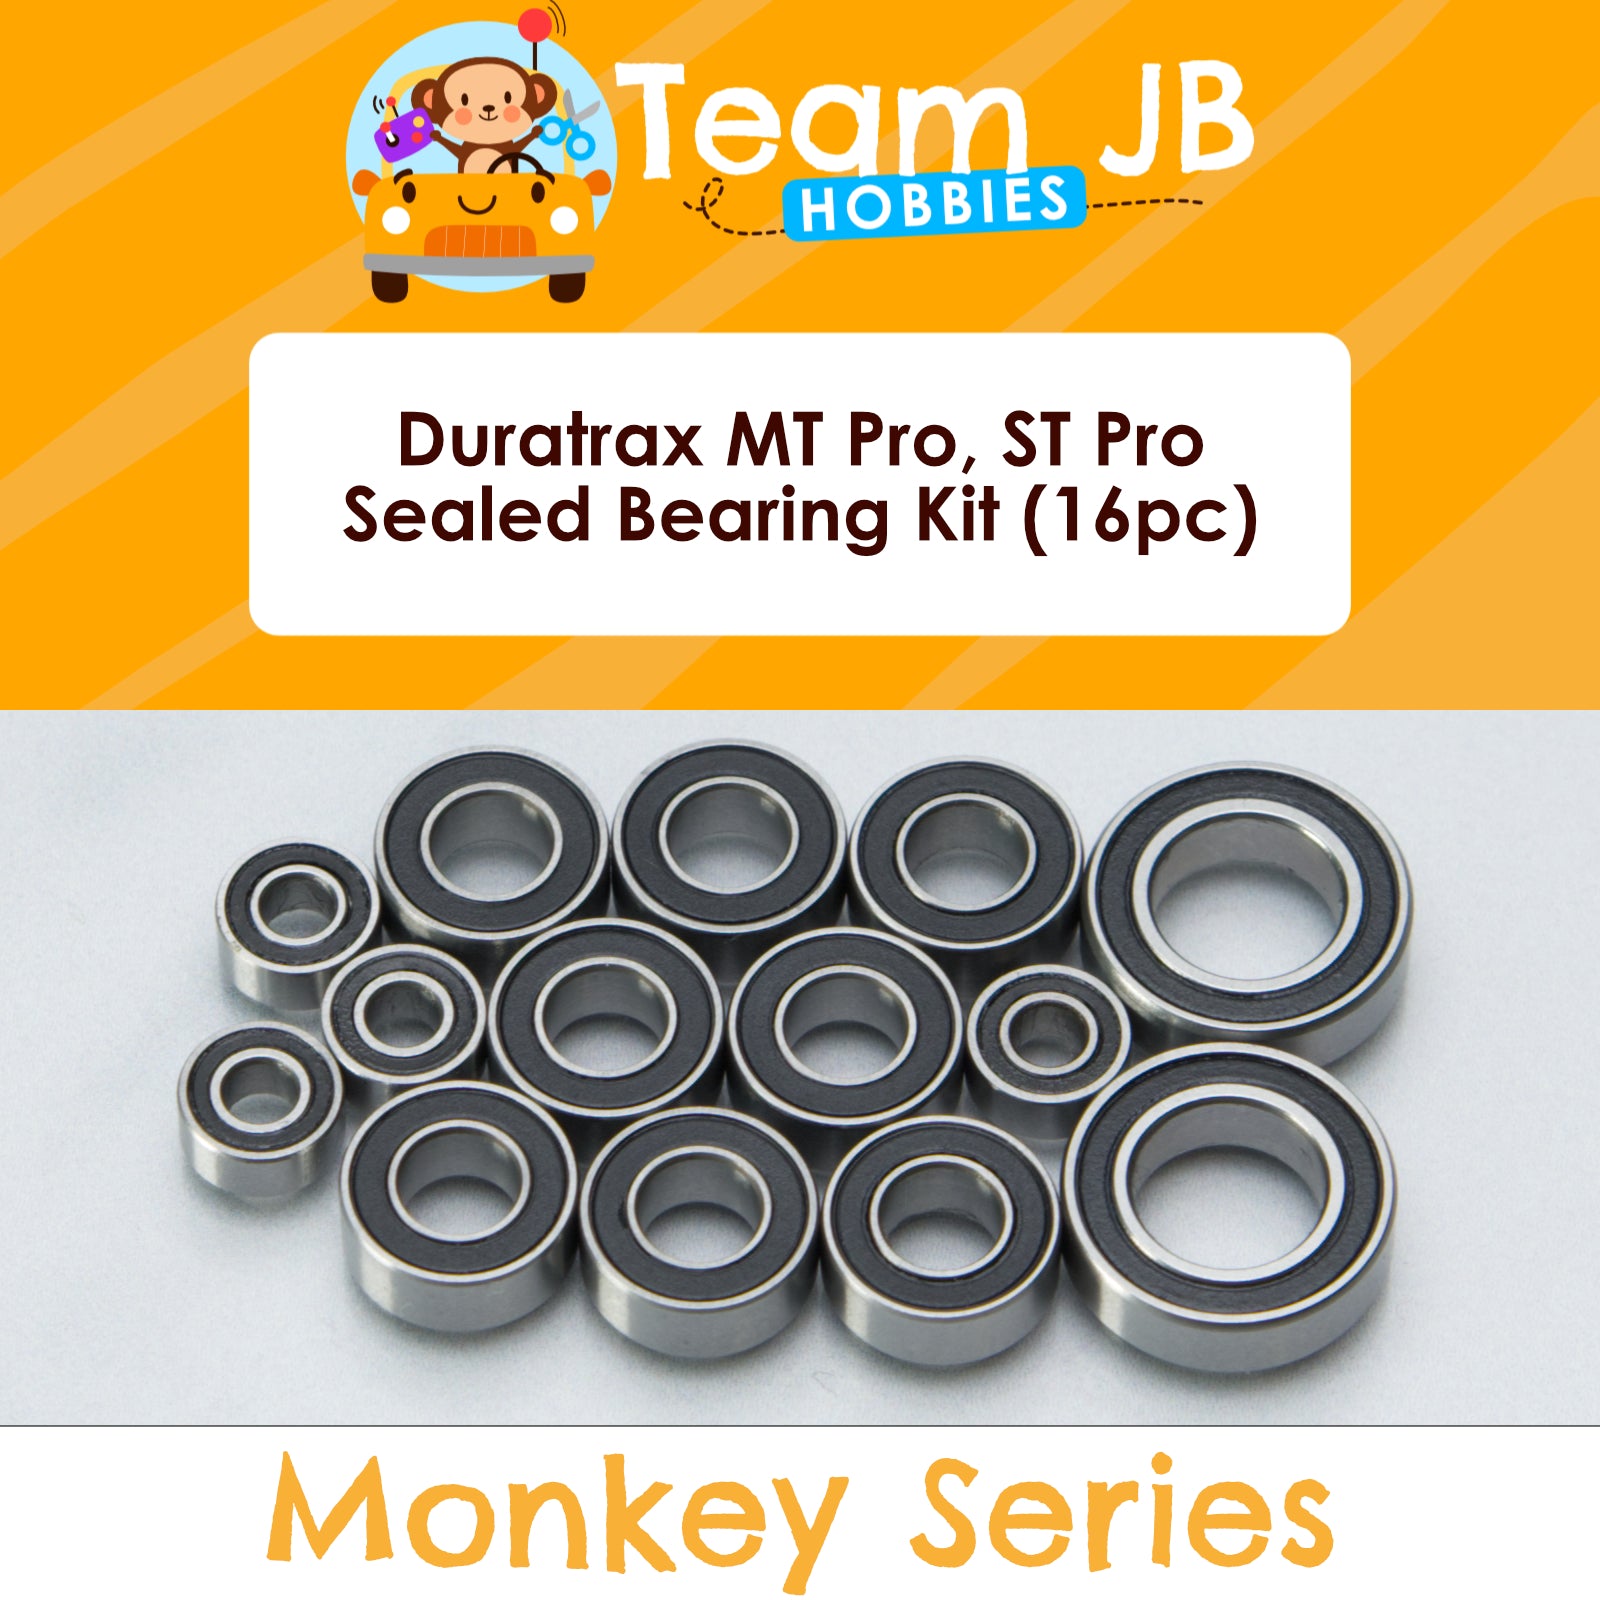 Duratrax MT Pro, ST Pro - Sealed Bearing Kit